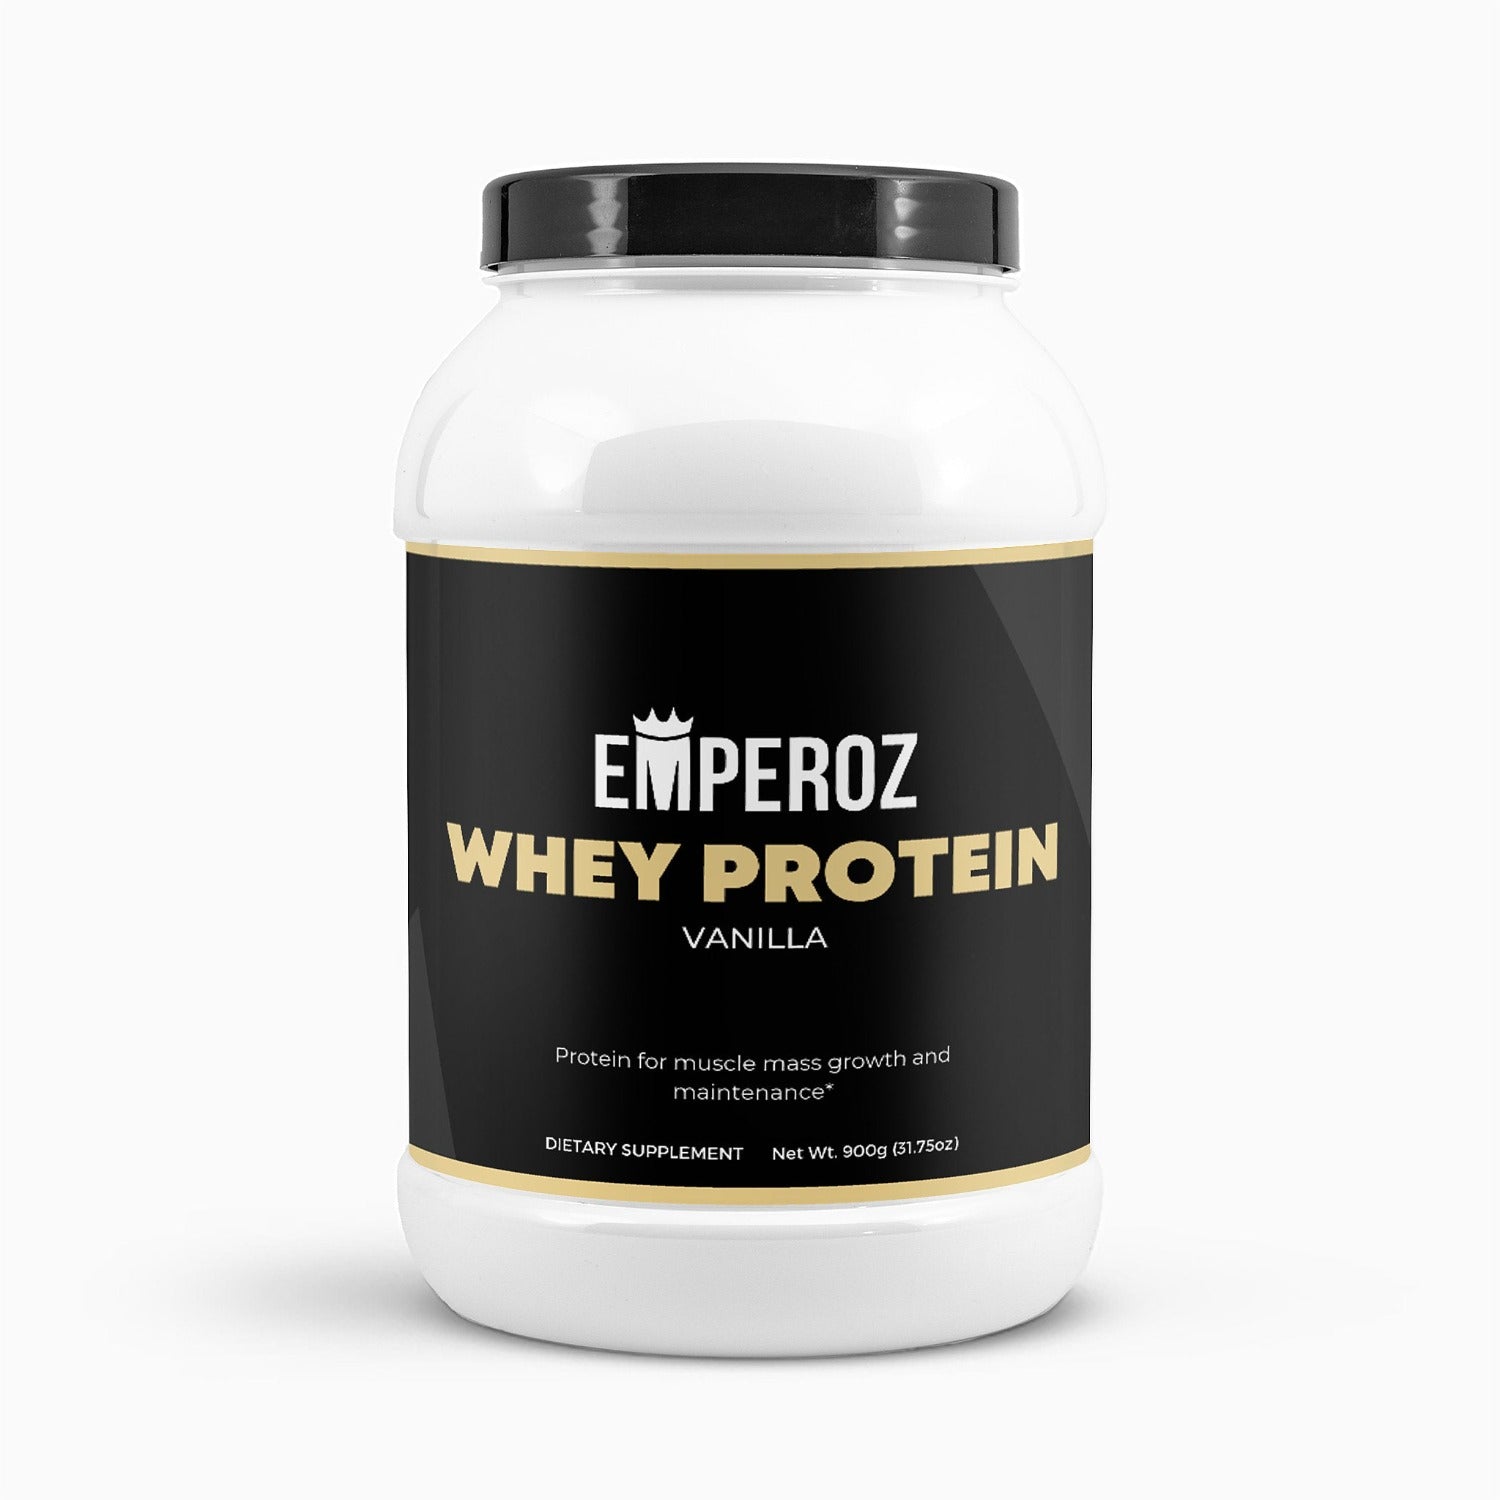 EMPEROZ Whey Protein